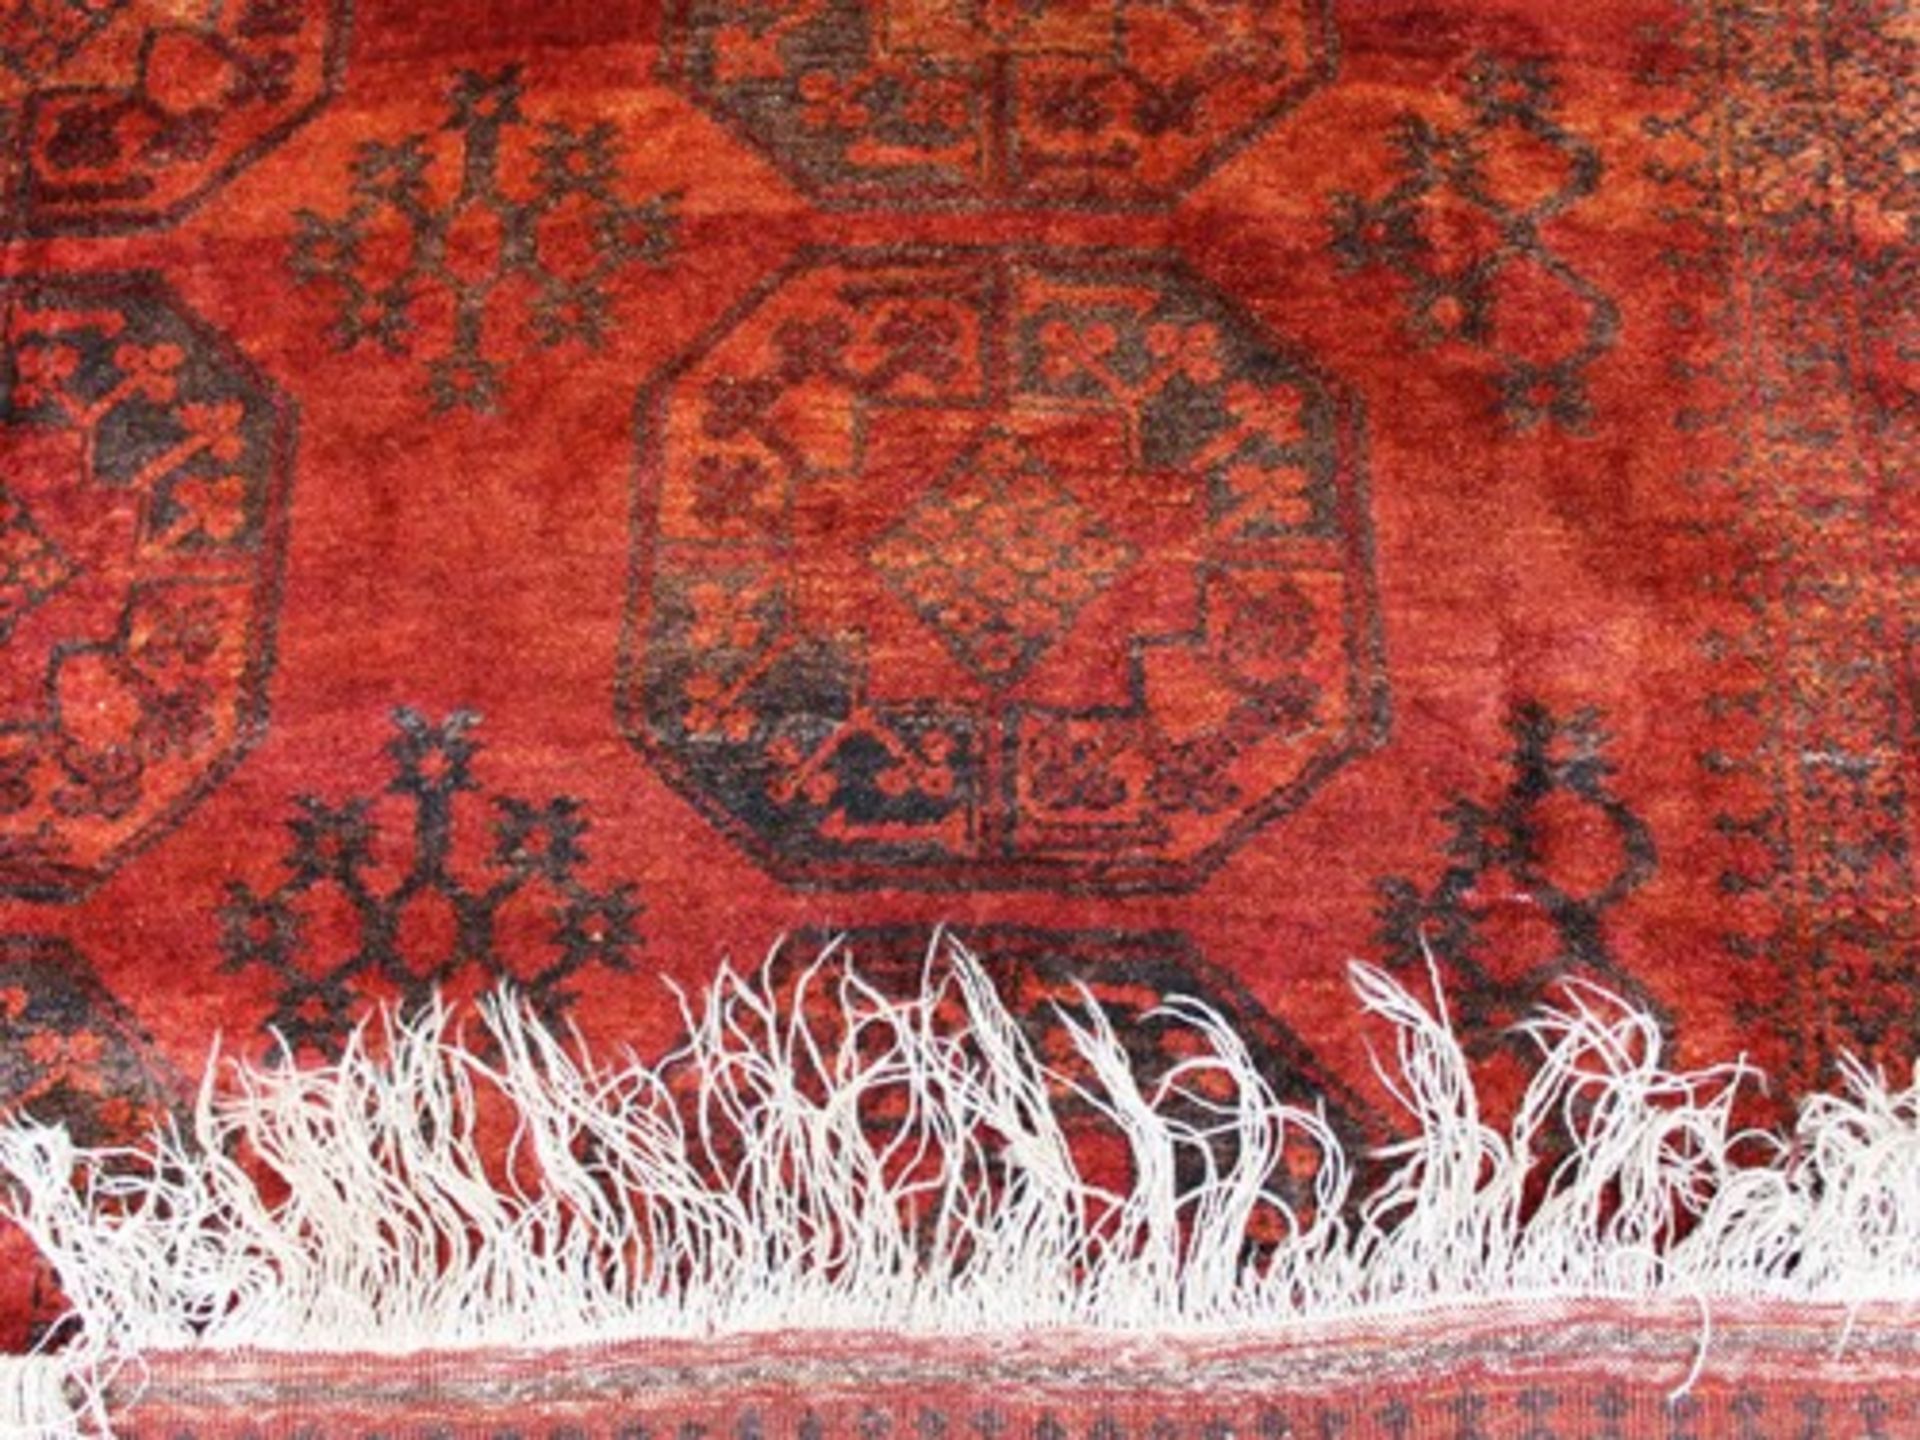 OrientteppichAfghanistan, Wolle/Wolle, hoher Flor, rot/gold, schwarz, mehrfach Bordüre, im Feld 2 - Image 7 of 8